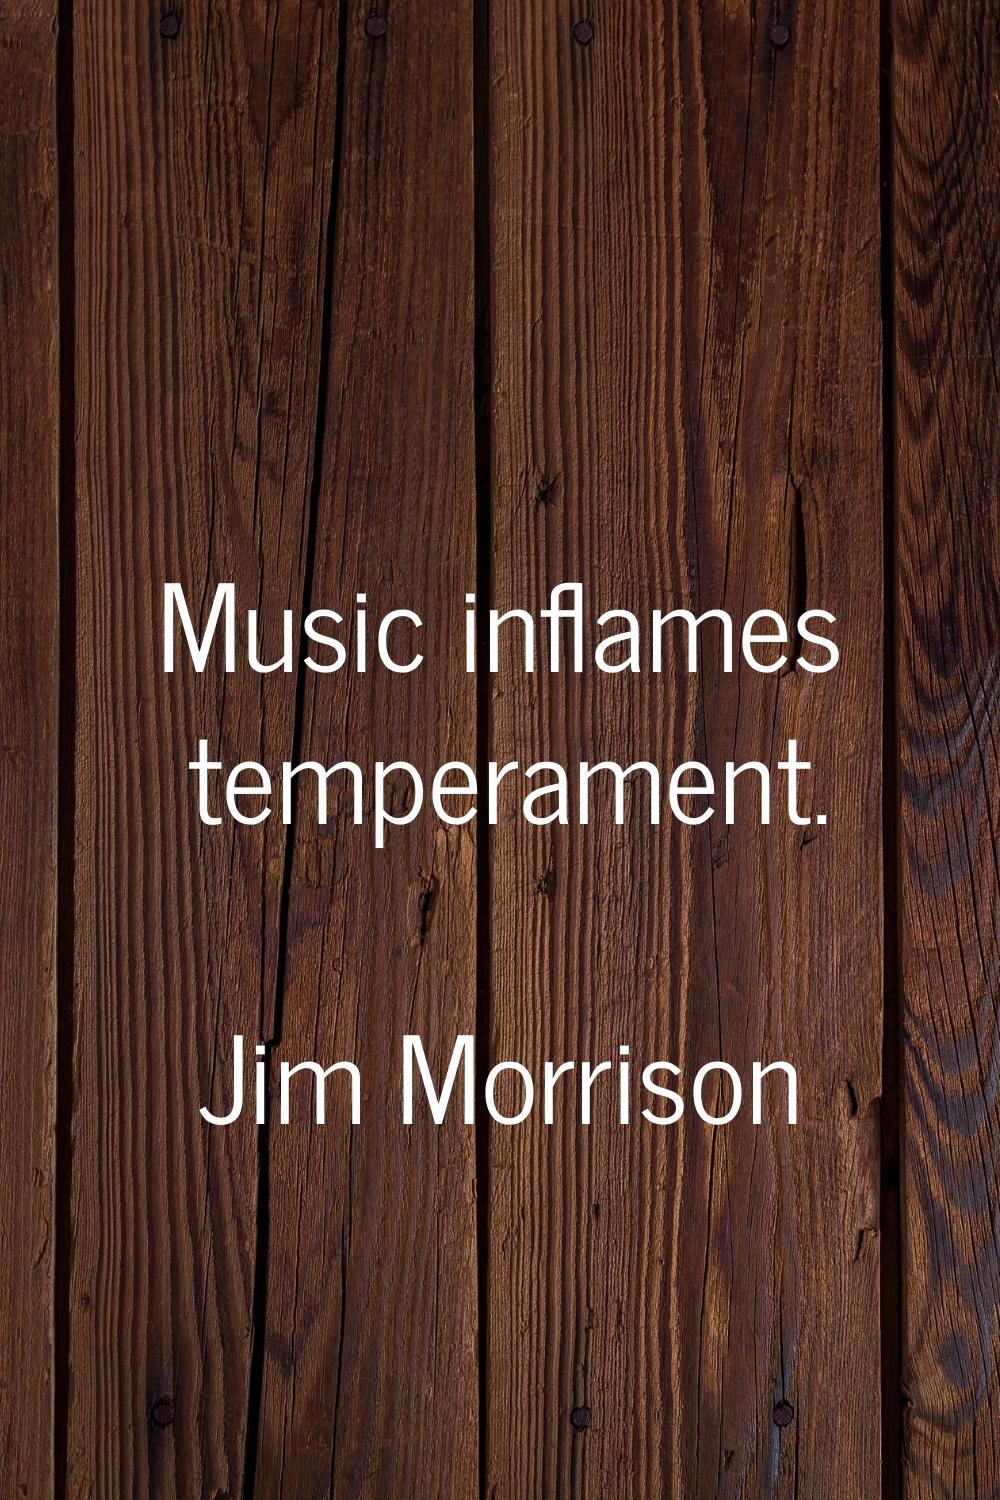 Music inflames temperament.